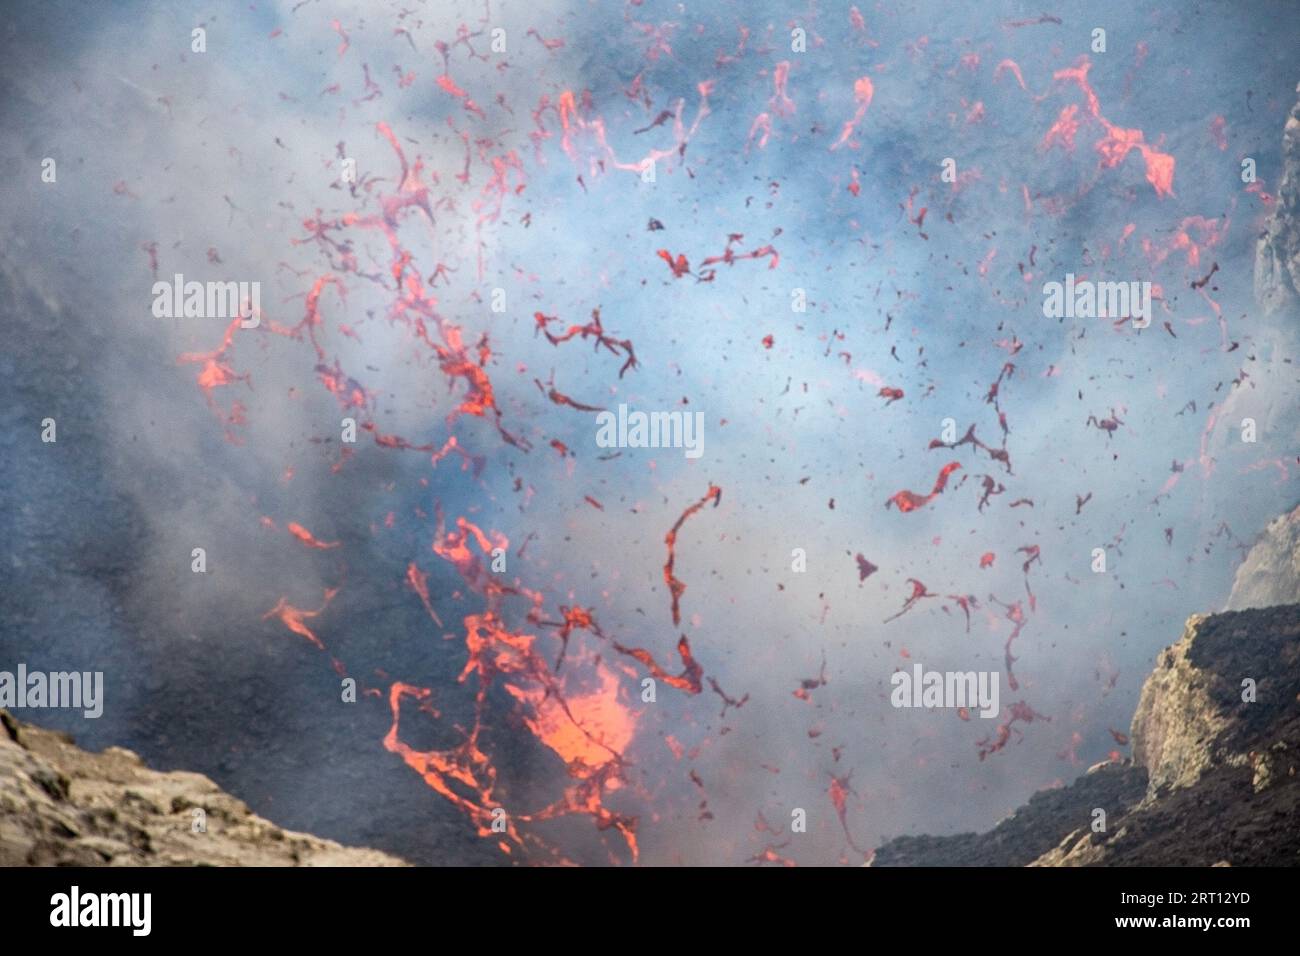 Lava violently erupting within the crater of Mount Yasur, Tanna Island, Vanuatu Stock Photo